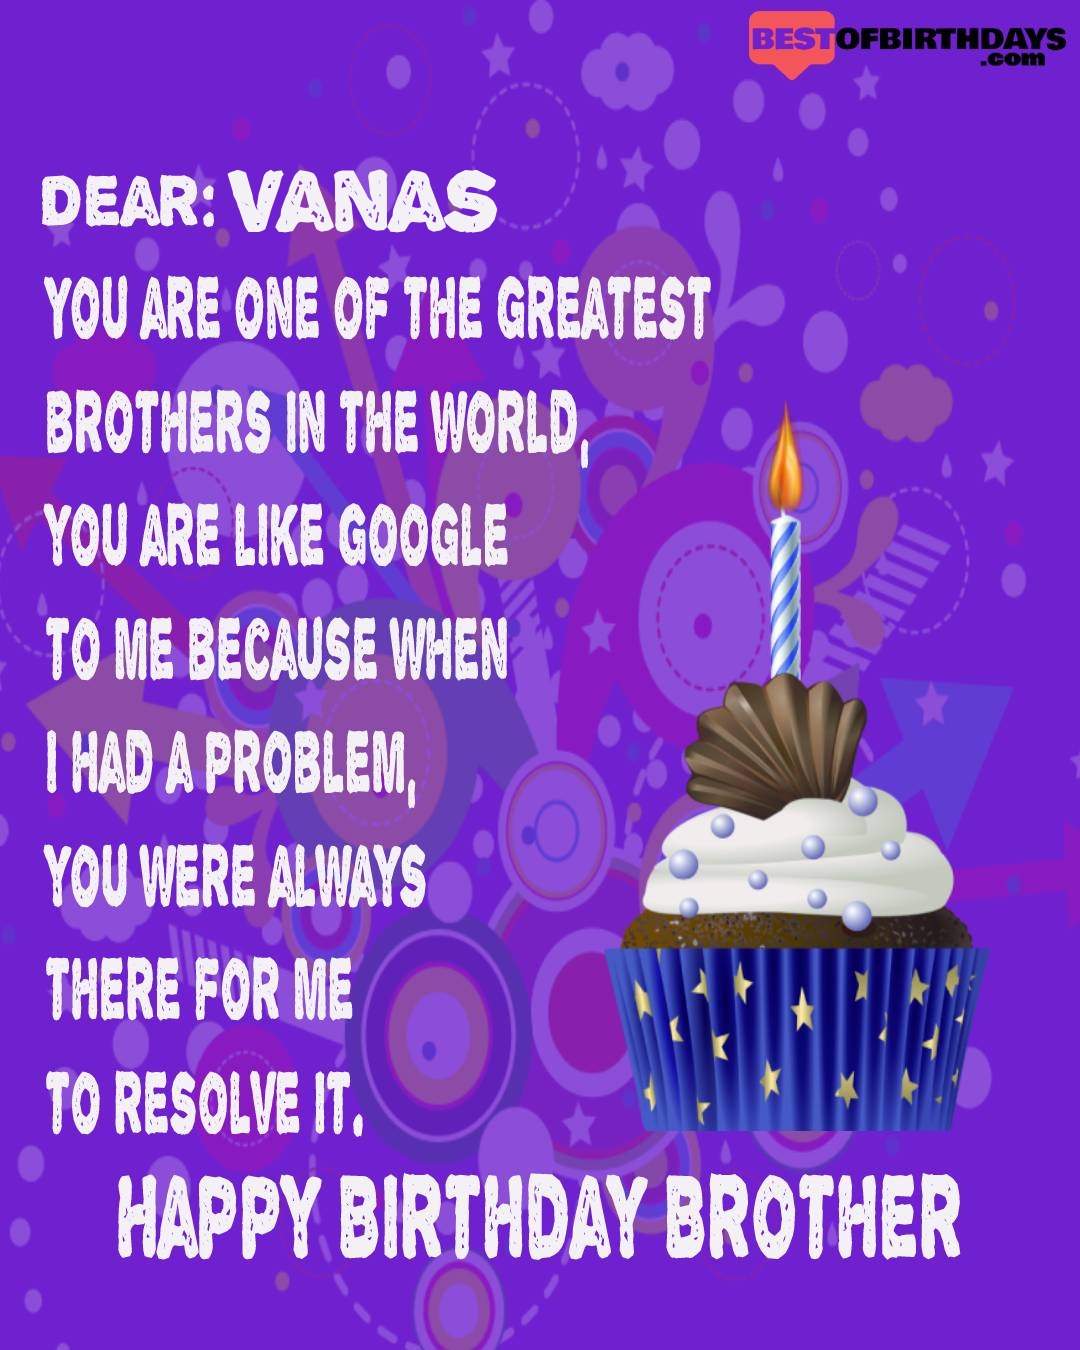 Happy birthday vanas bhai brother bro